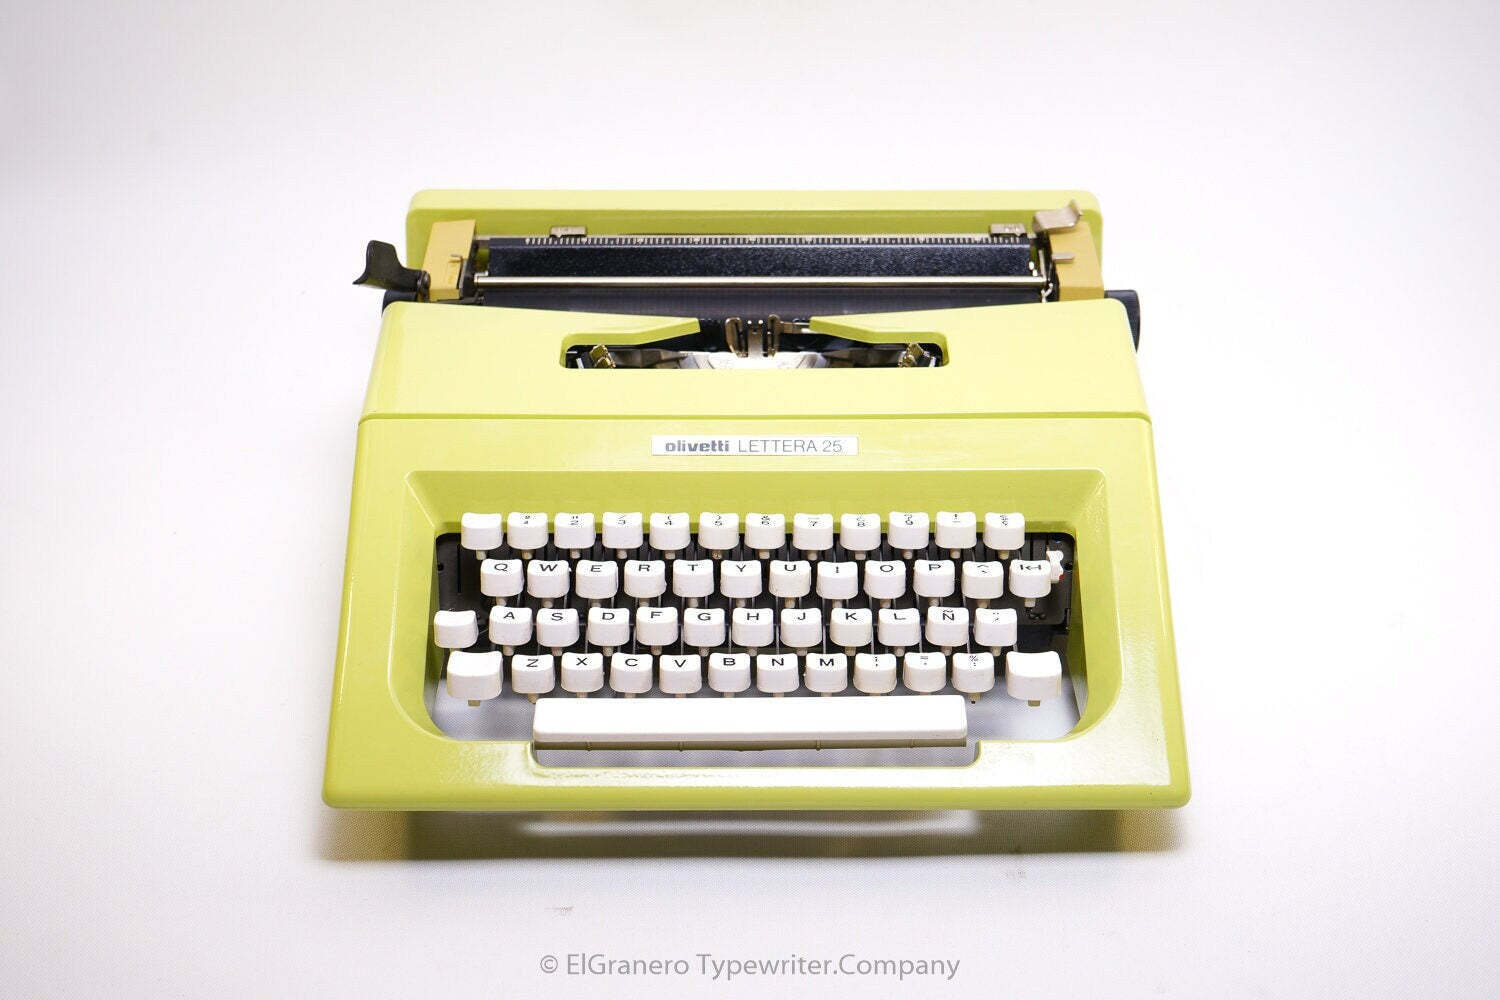 SALE - Olivetti Lettera 25 Lime Yellow Typewriter, Vintage, Professionally